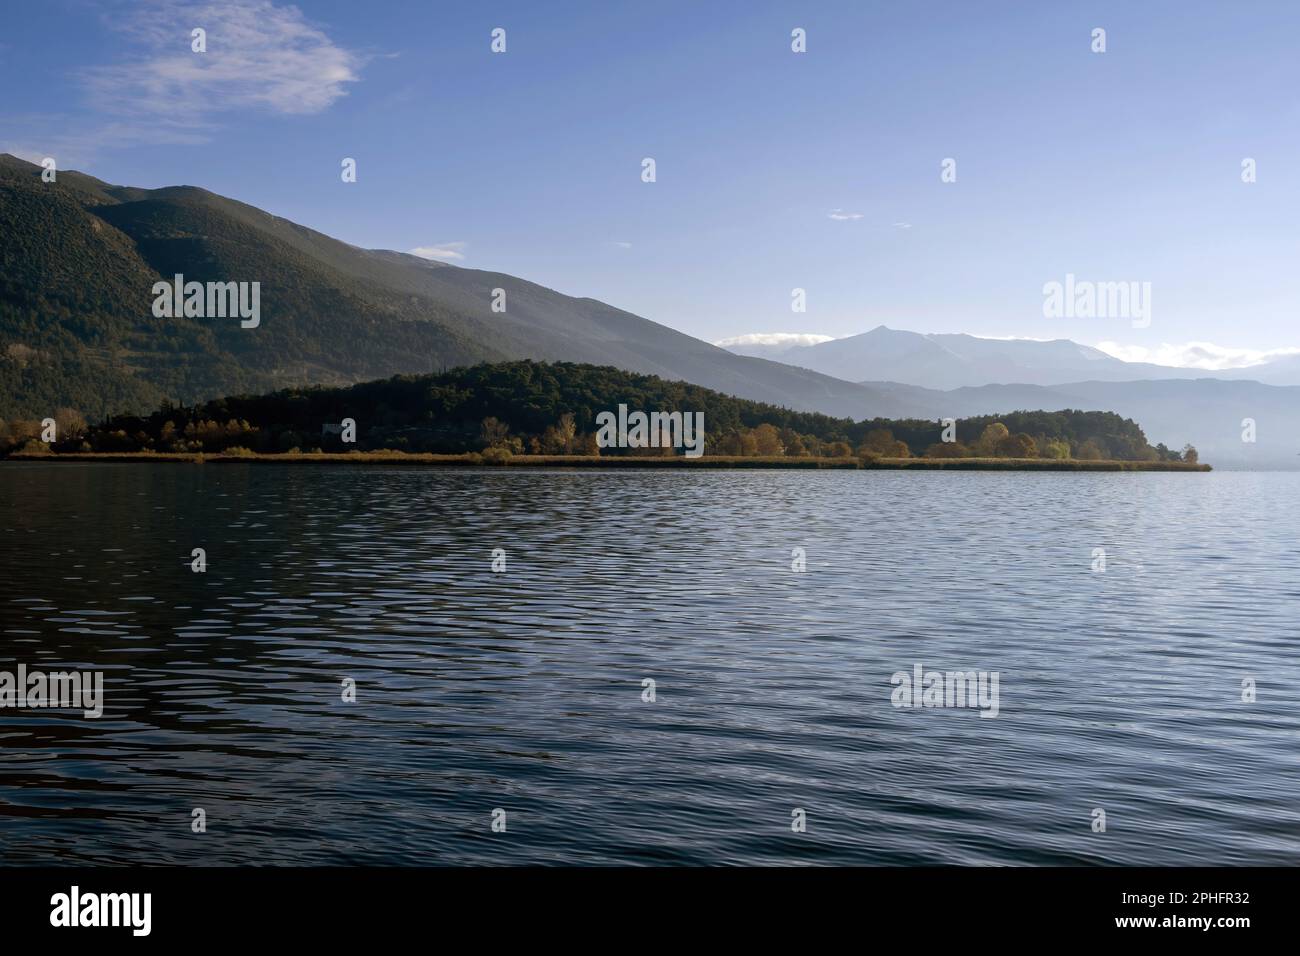 Greece, Pamvotis Lake, Ioannina city, Epirus. Destination Giannena, view of dark calm water, nisaki, nature, afternoon blue sky background. Stock Photo